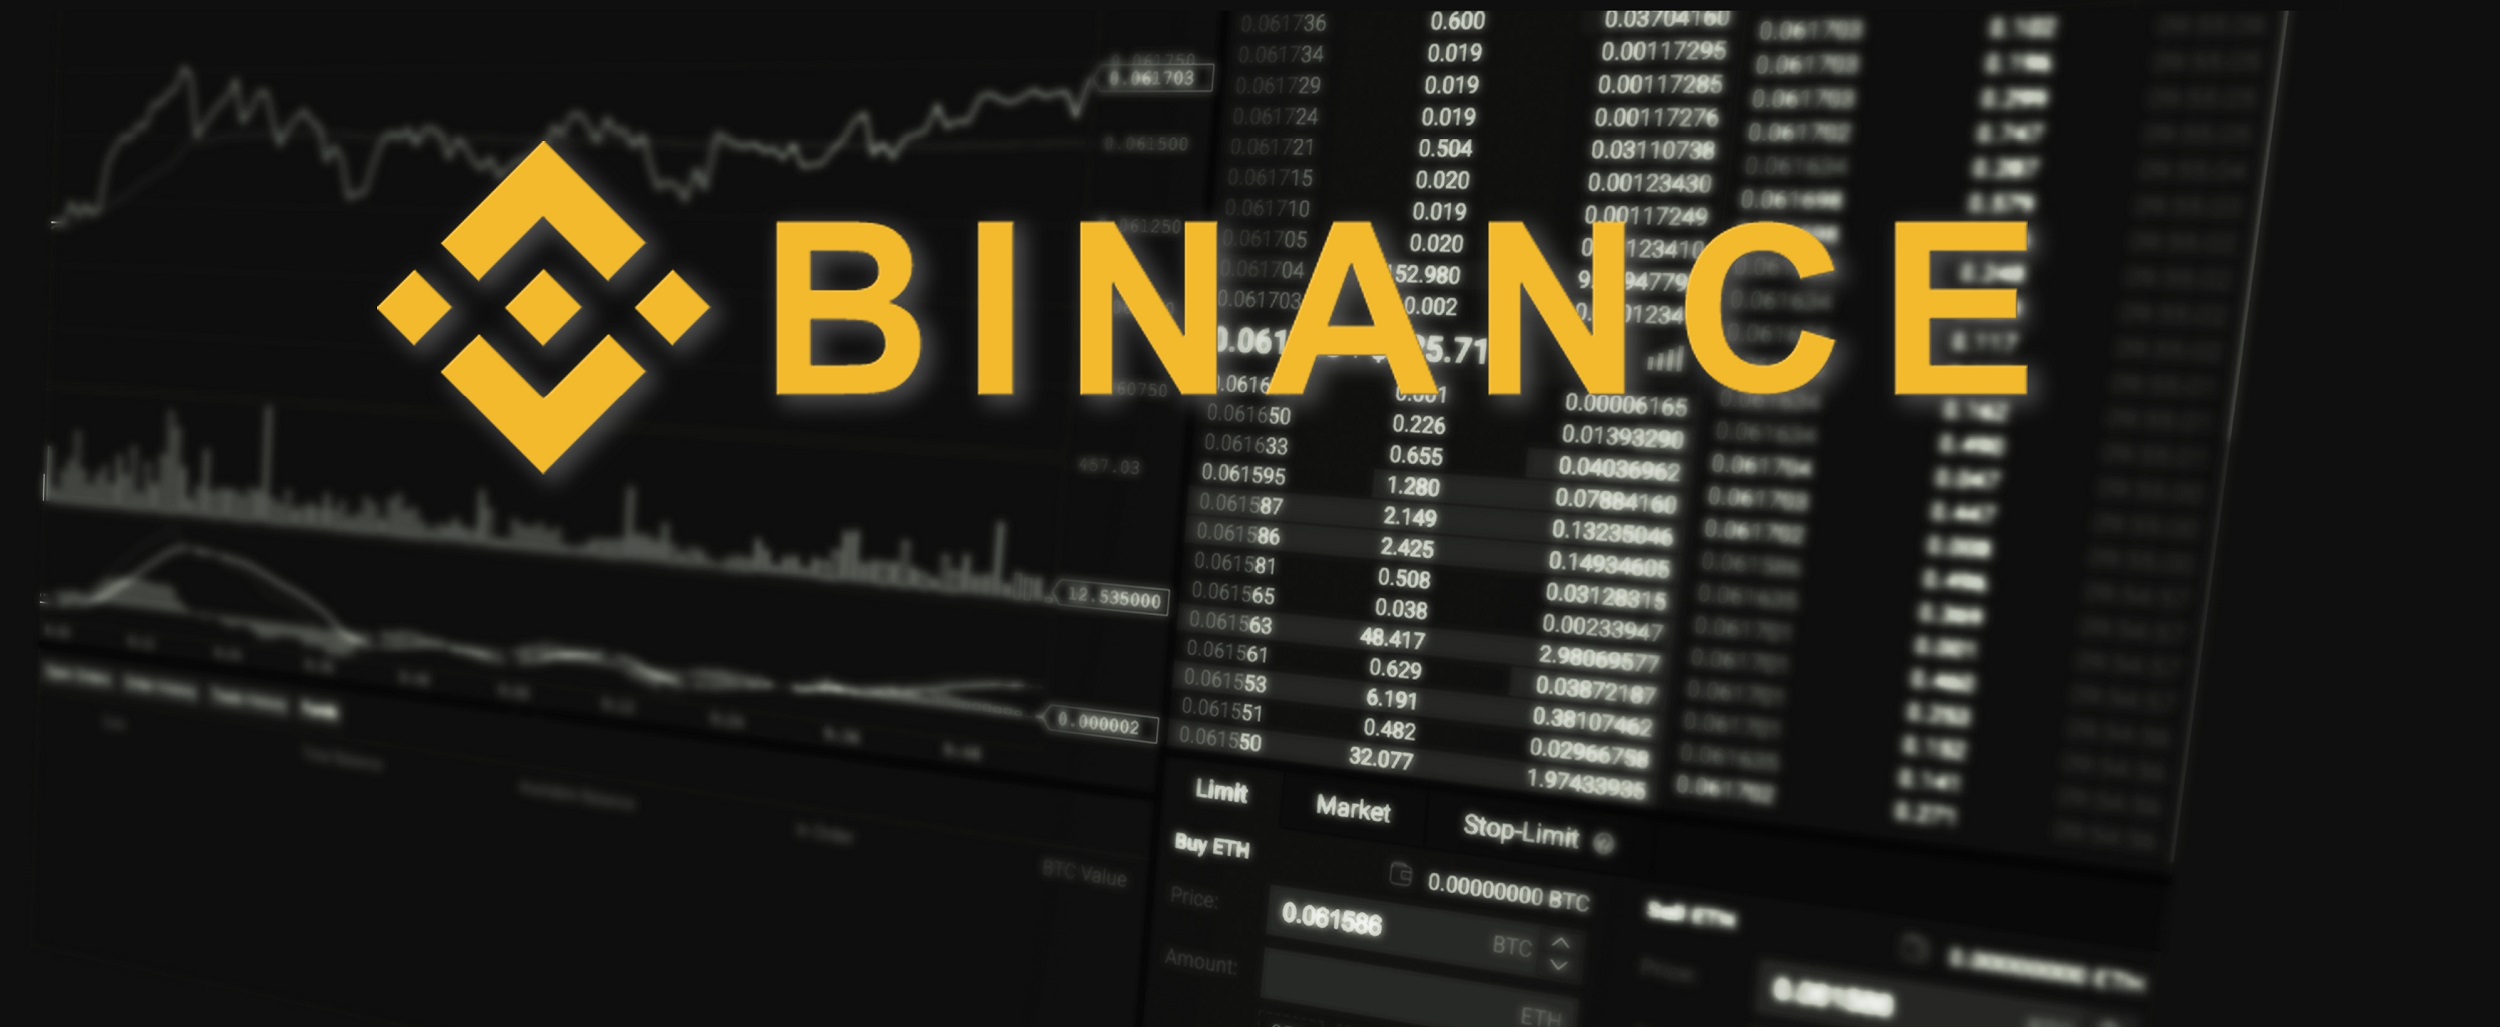  users binance asks balances btt erroneously token 